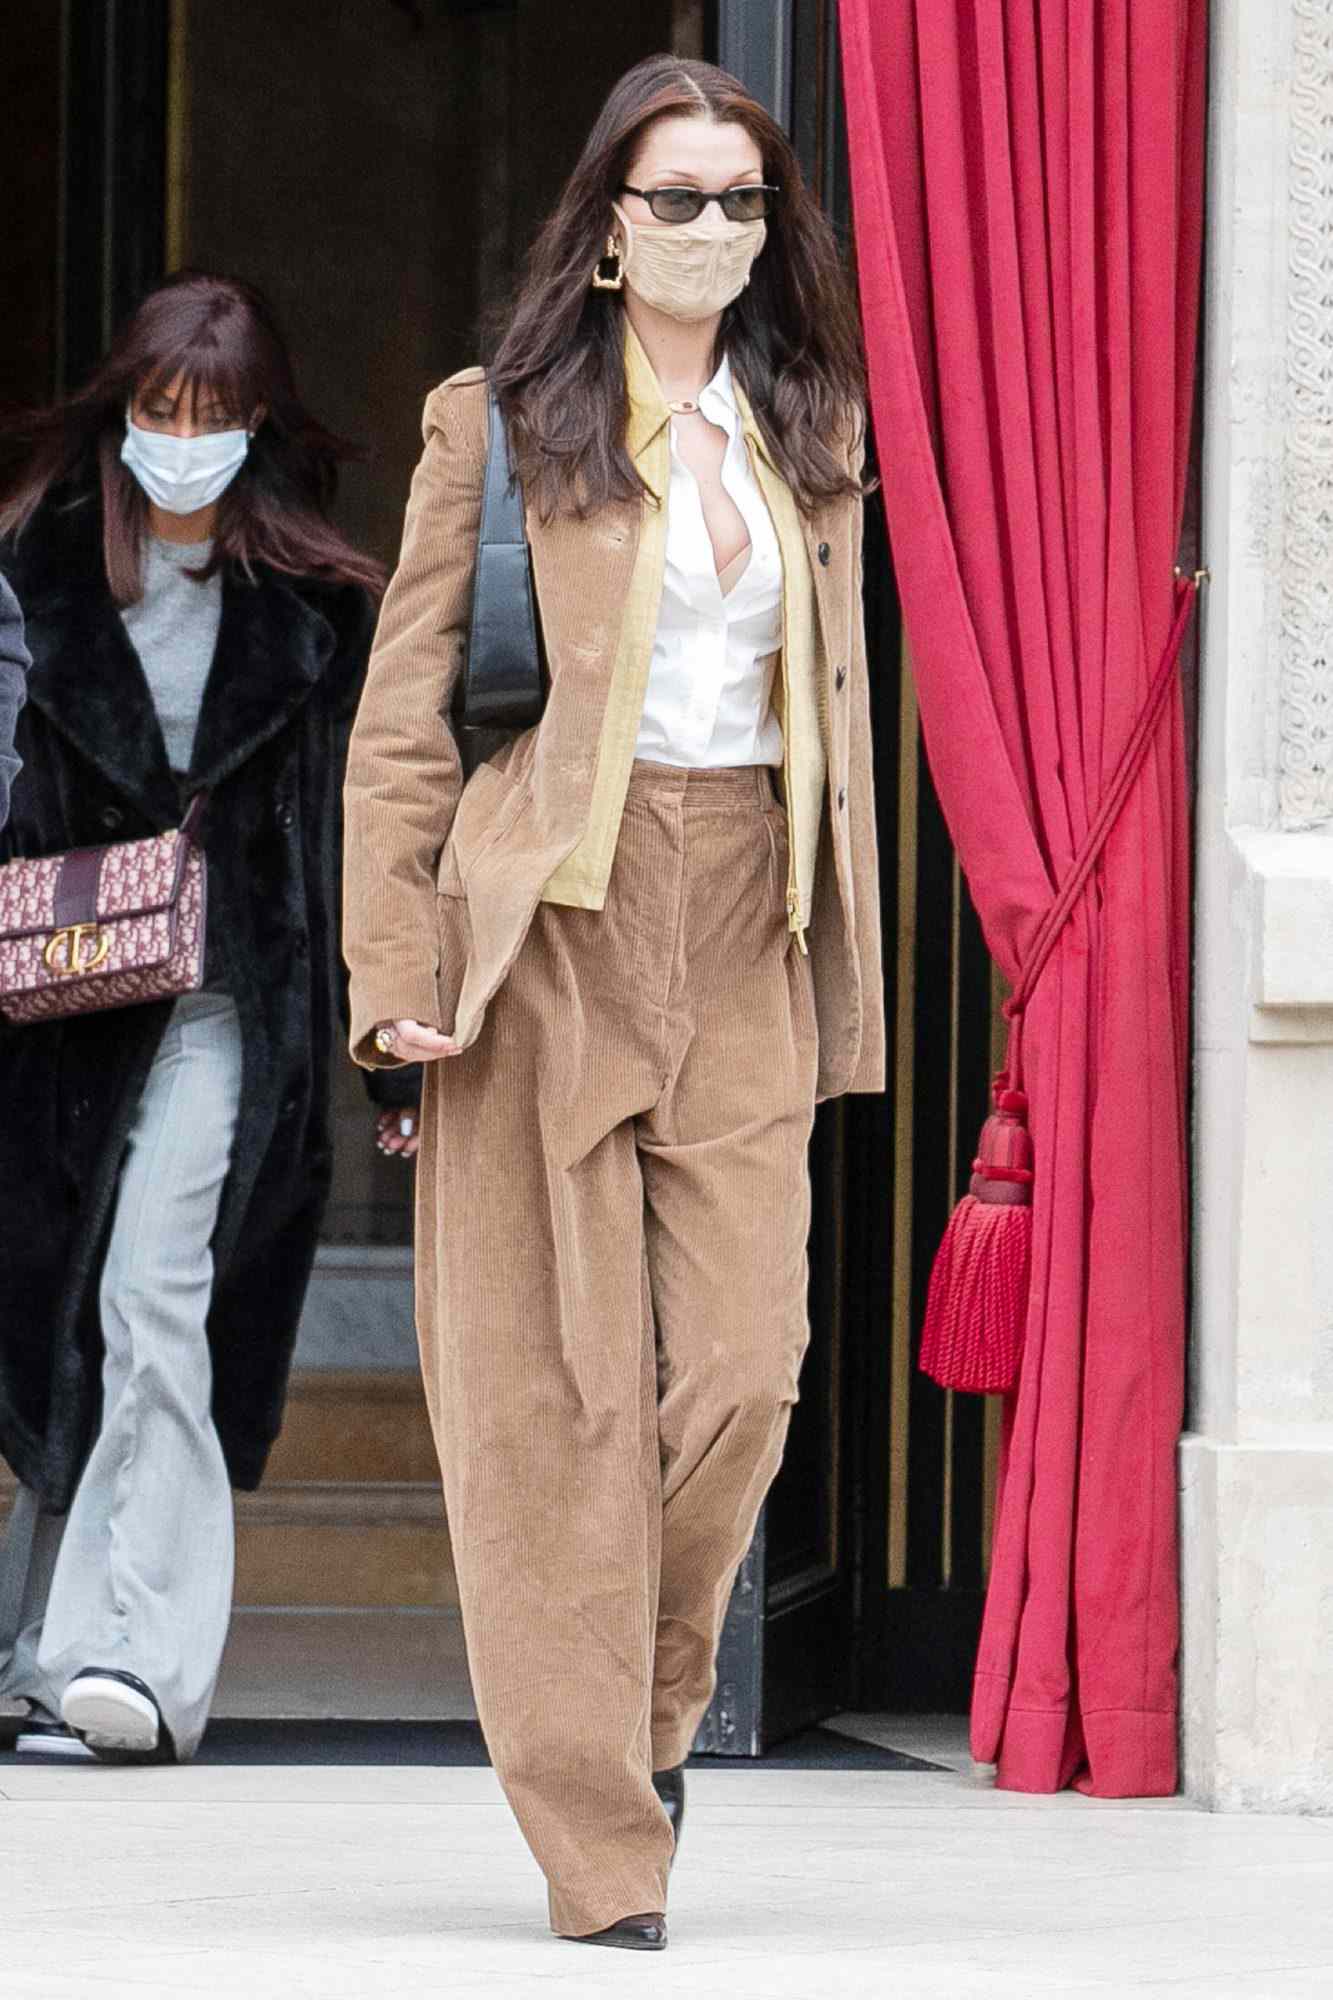 Model Bella Hadid is seen on January 26, 2021 in Paris, France